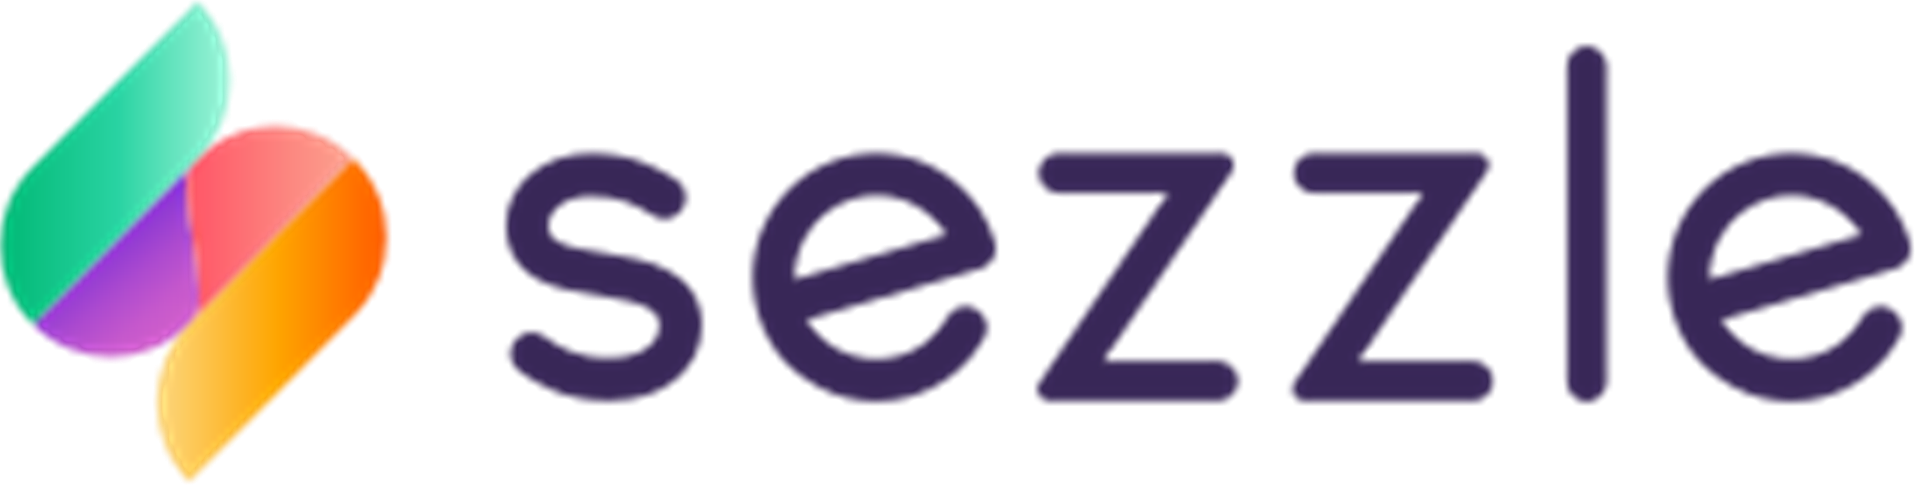 sezzle company